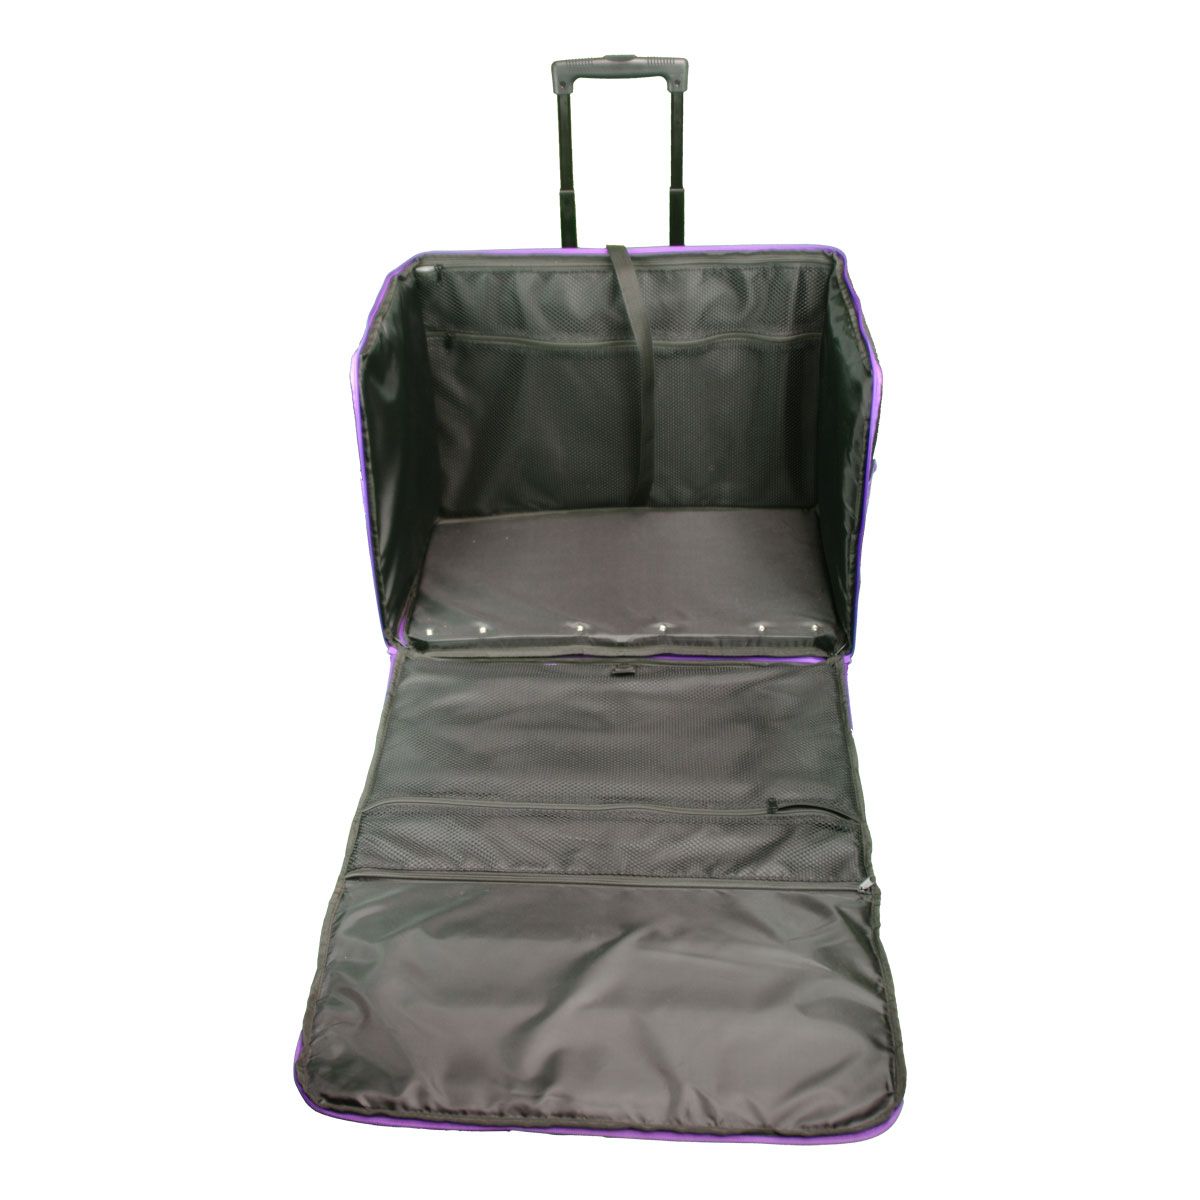 60 x 42 x 30cm XL Sewing Machine Trolley Bag Plain Black with Purple Trim 